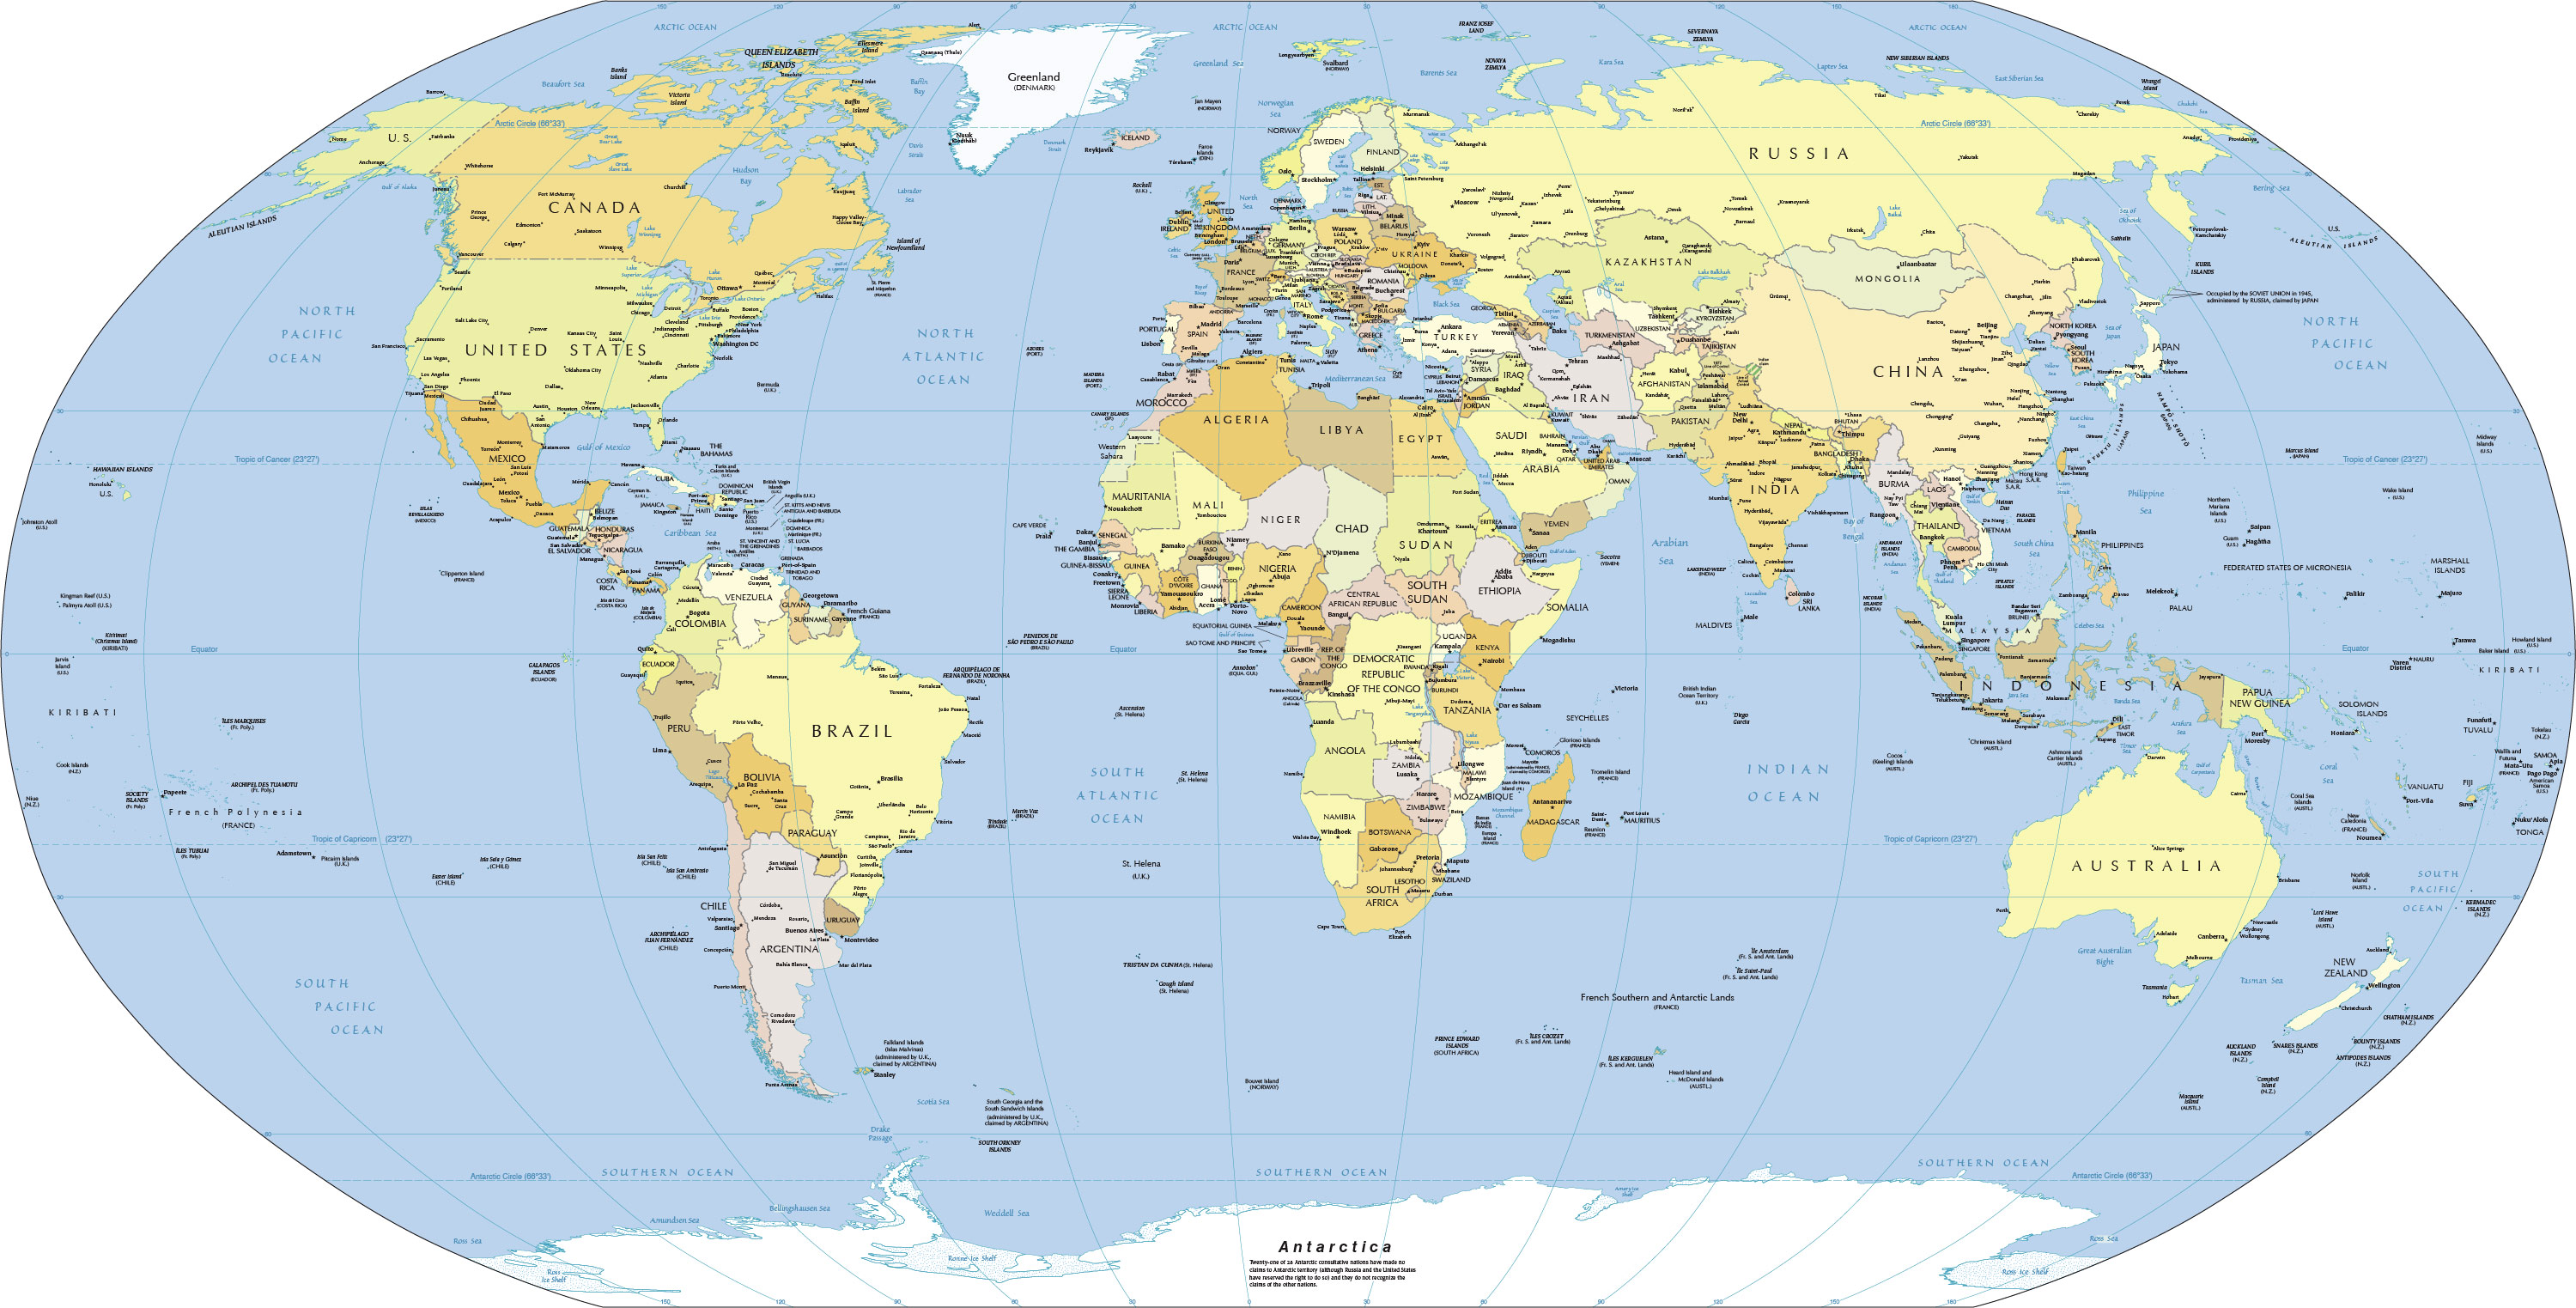 earth map political